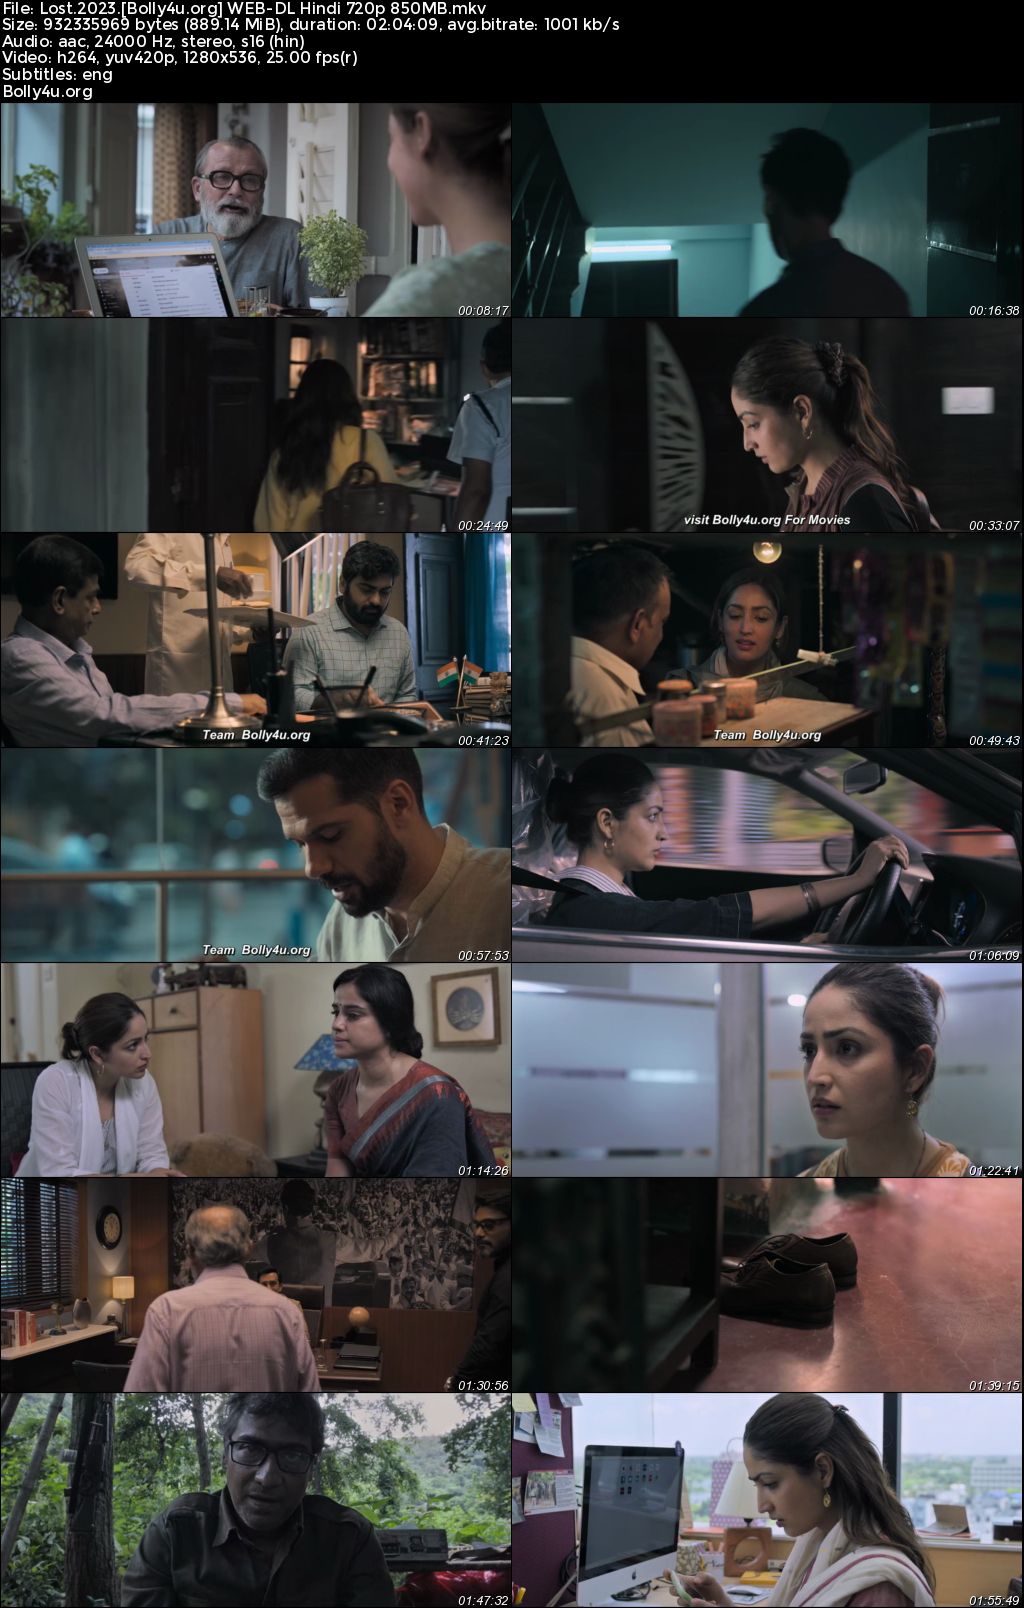 LOST 2023 WEB-DL Hindi Full Movie Download 1080p 720p 480p